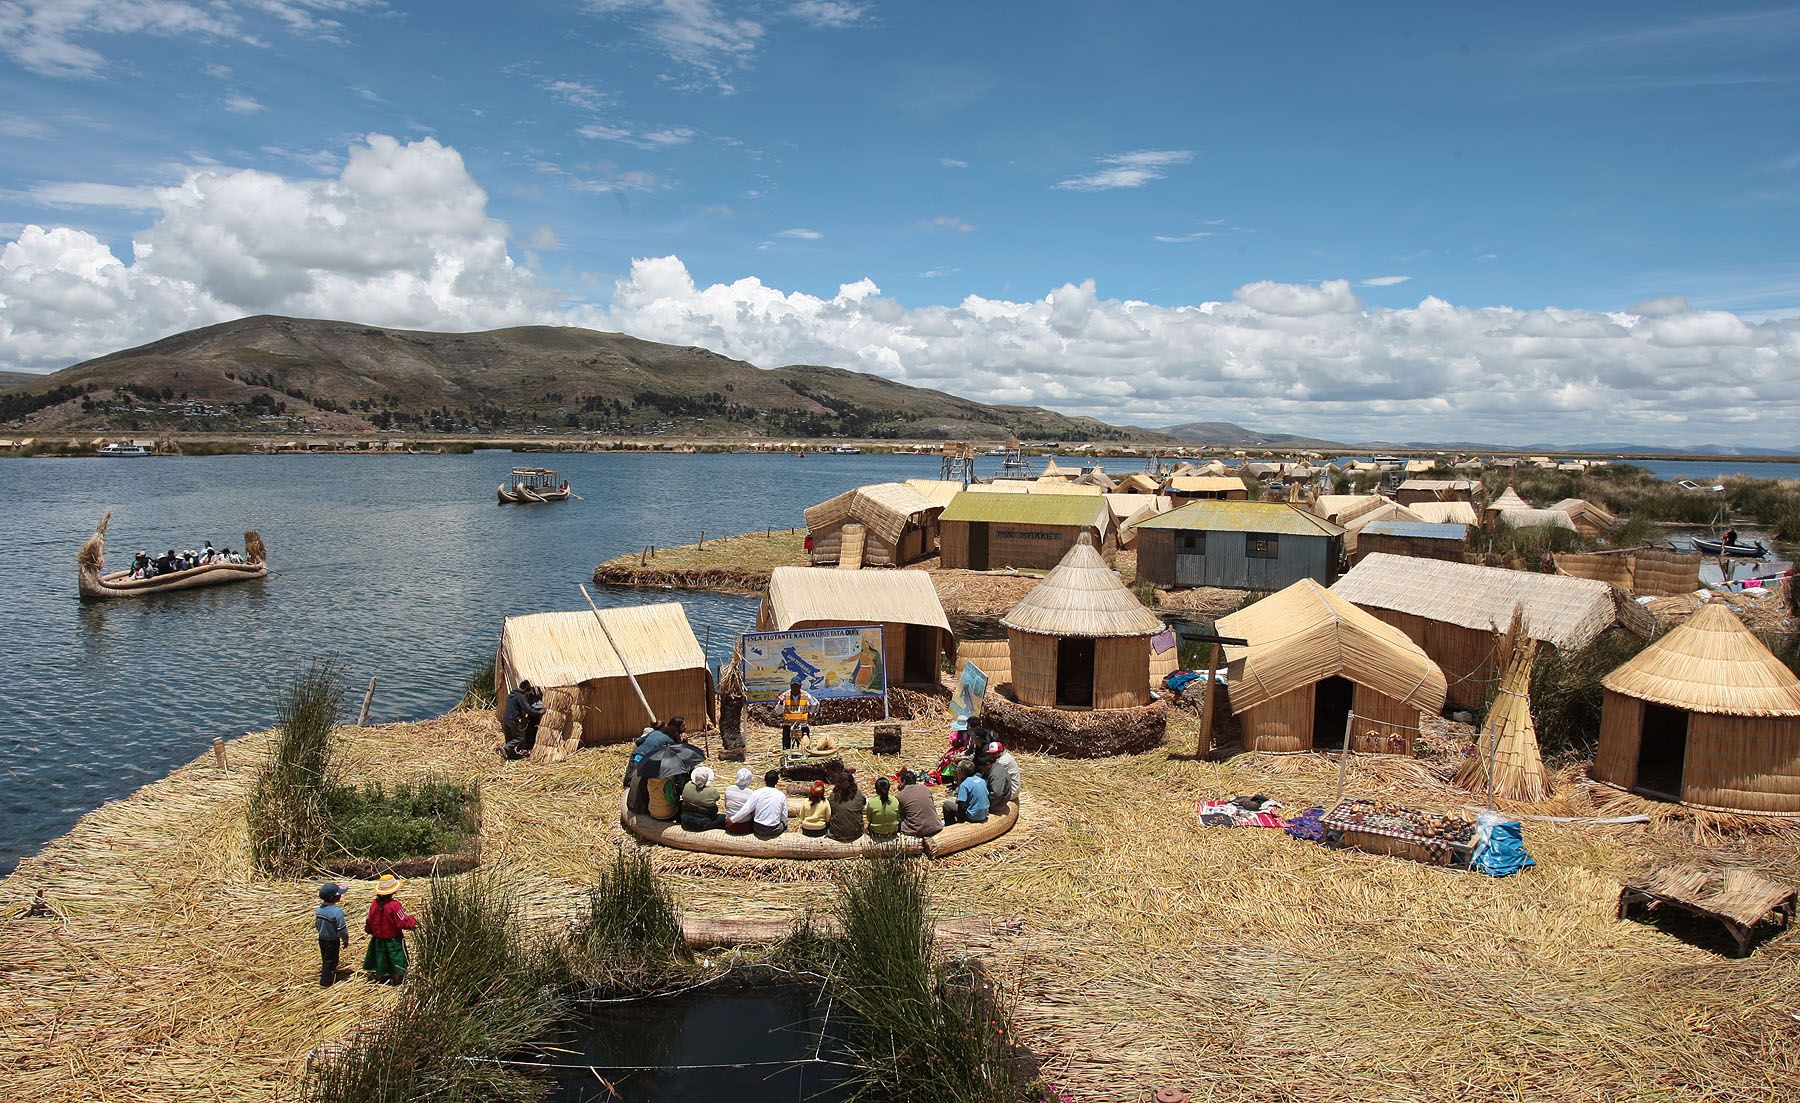 Lake Titicaca candidature at new seven wonders of nature contest. Photo: ANDINA / Carlos Lezama.